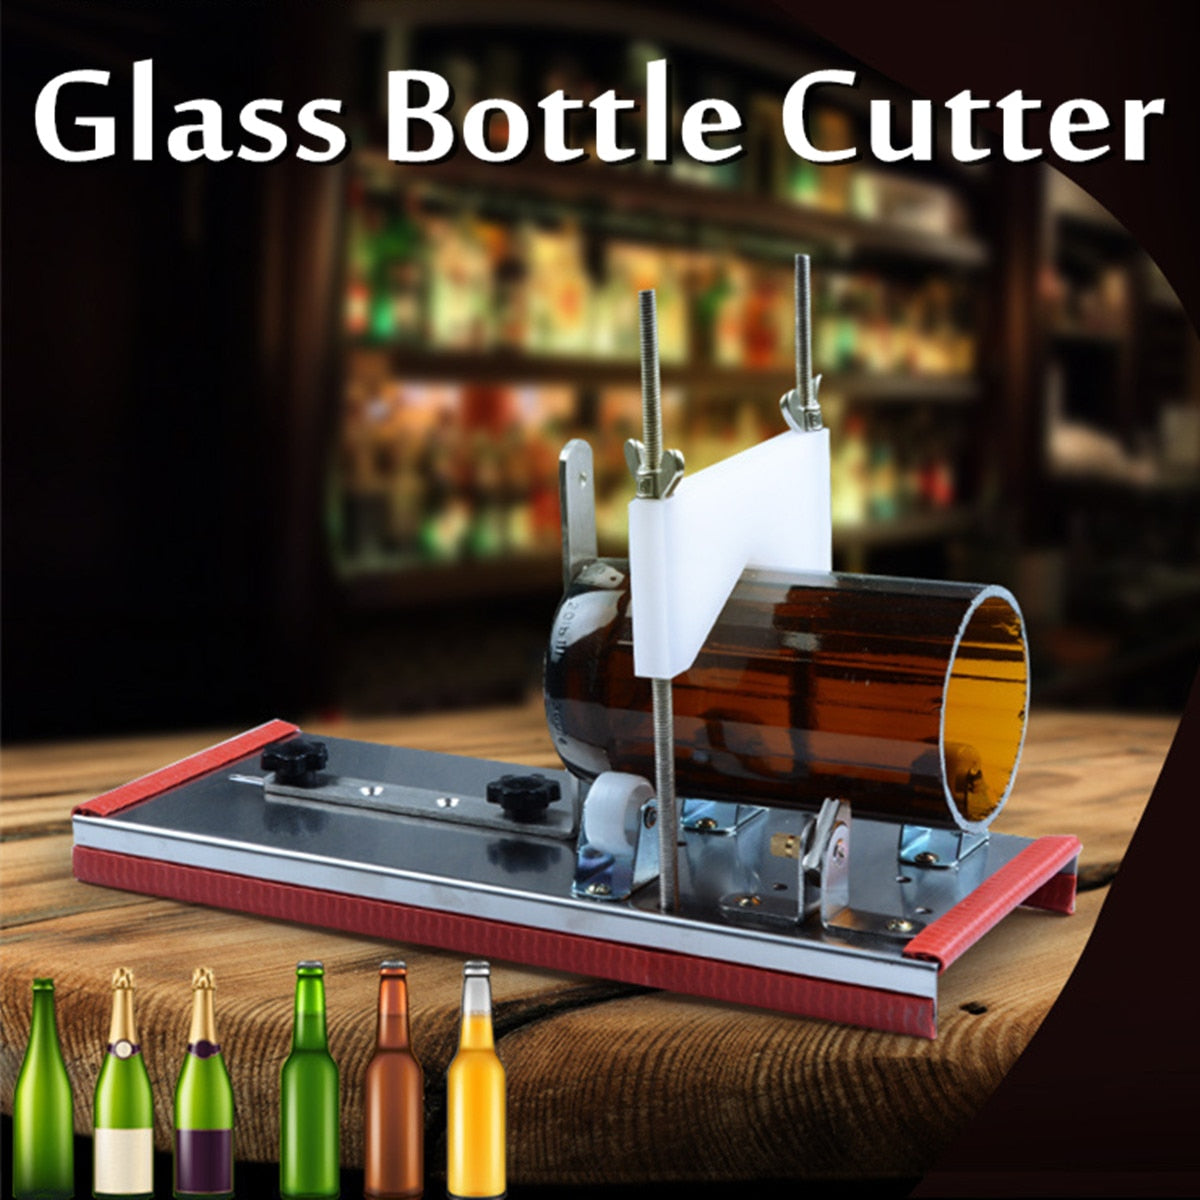 Glass Bottle Cutter Kit DIY Glass Cutter for Bottles Beer & Wines